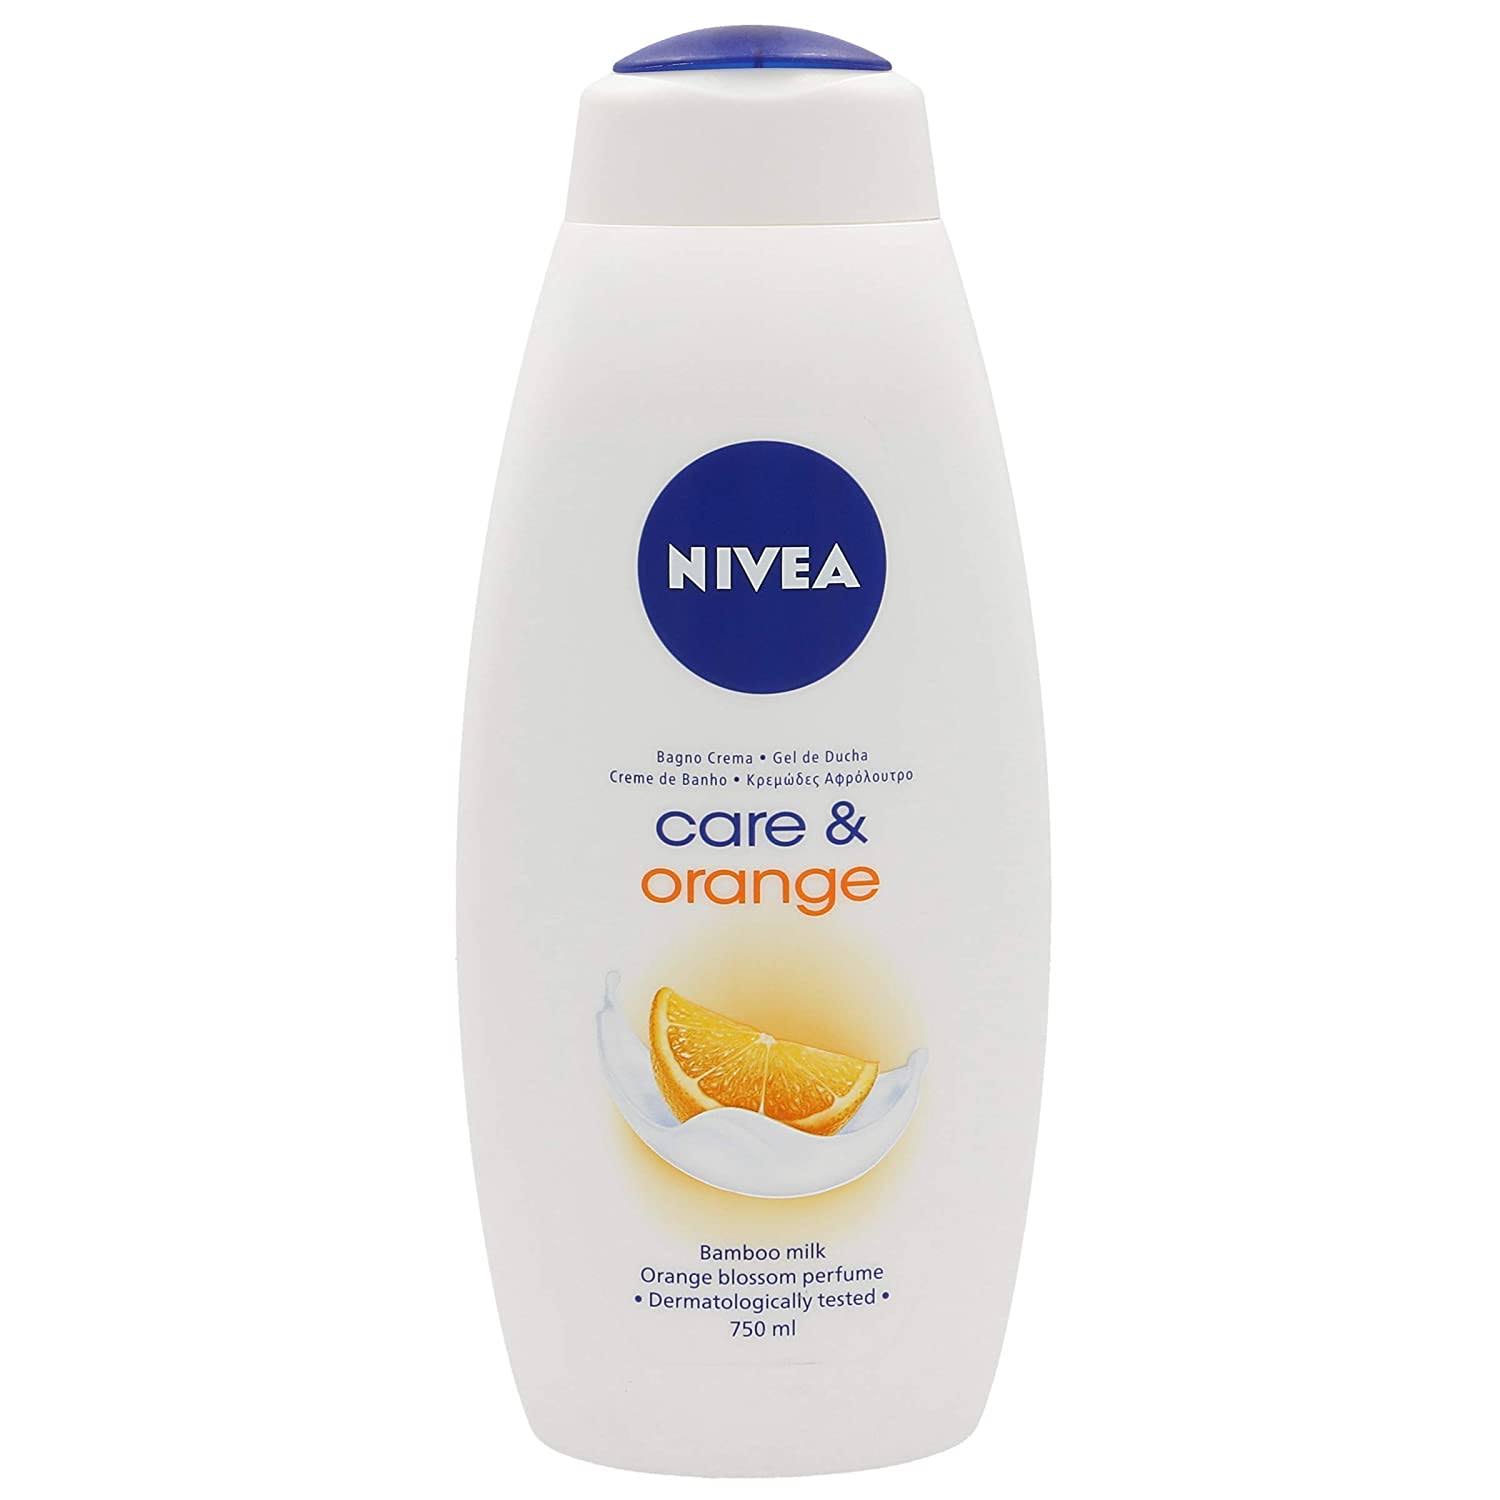 Nivea Indulgent Moisture Orange Caring Shower Cream - 750ml